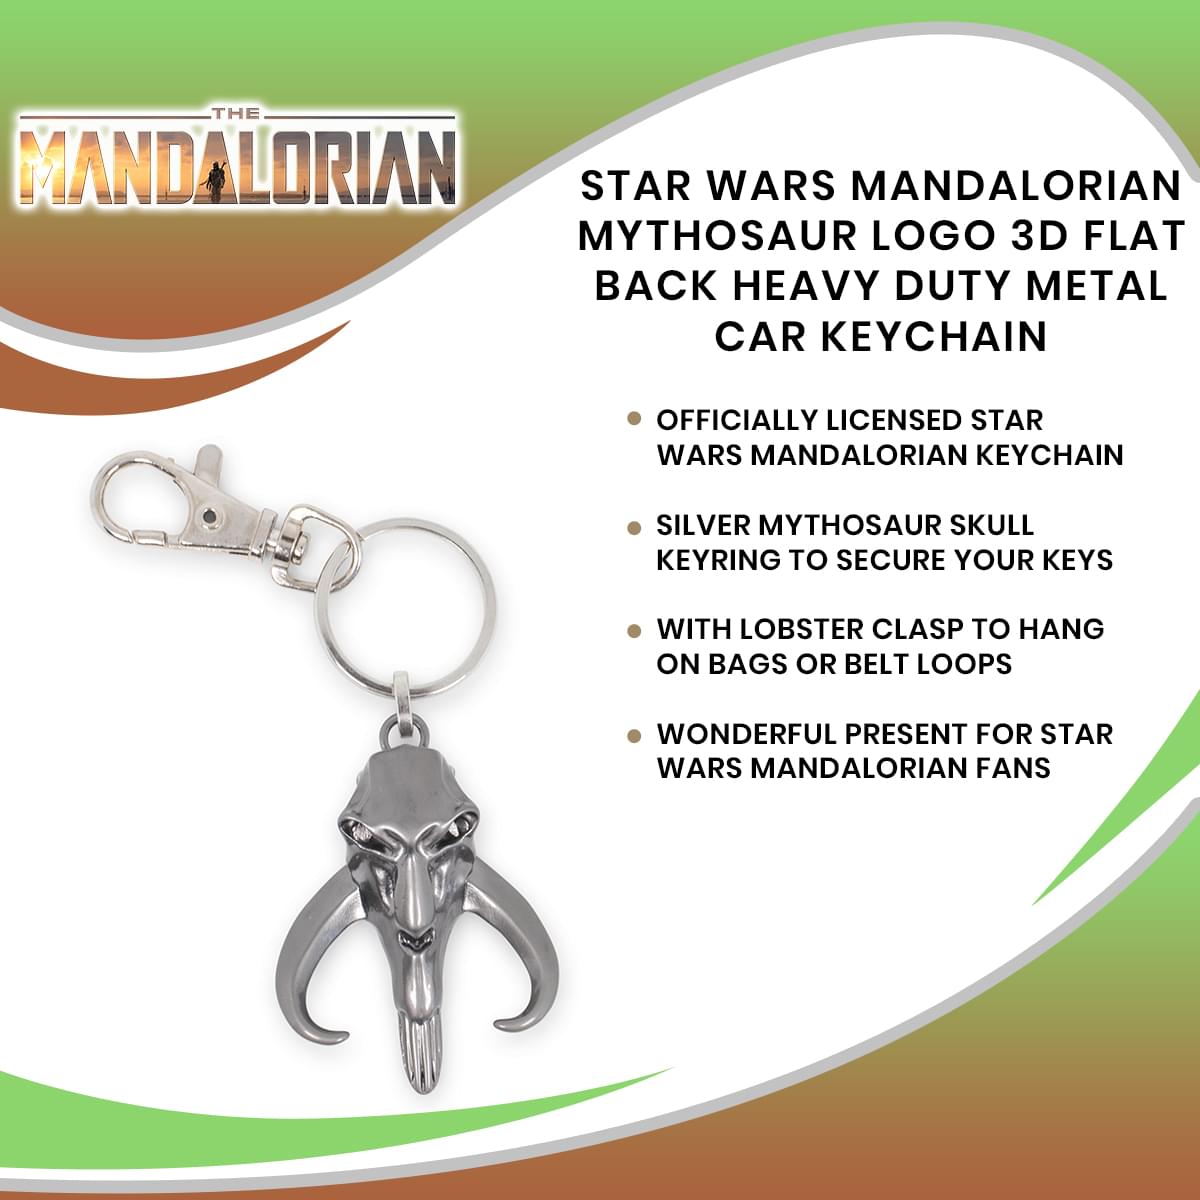 Star Wars Mandalorian Mythosaur Logo 3D Flat Back Heavy Duty Metal Car Keychain